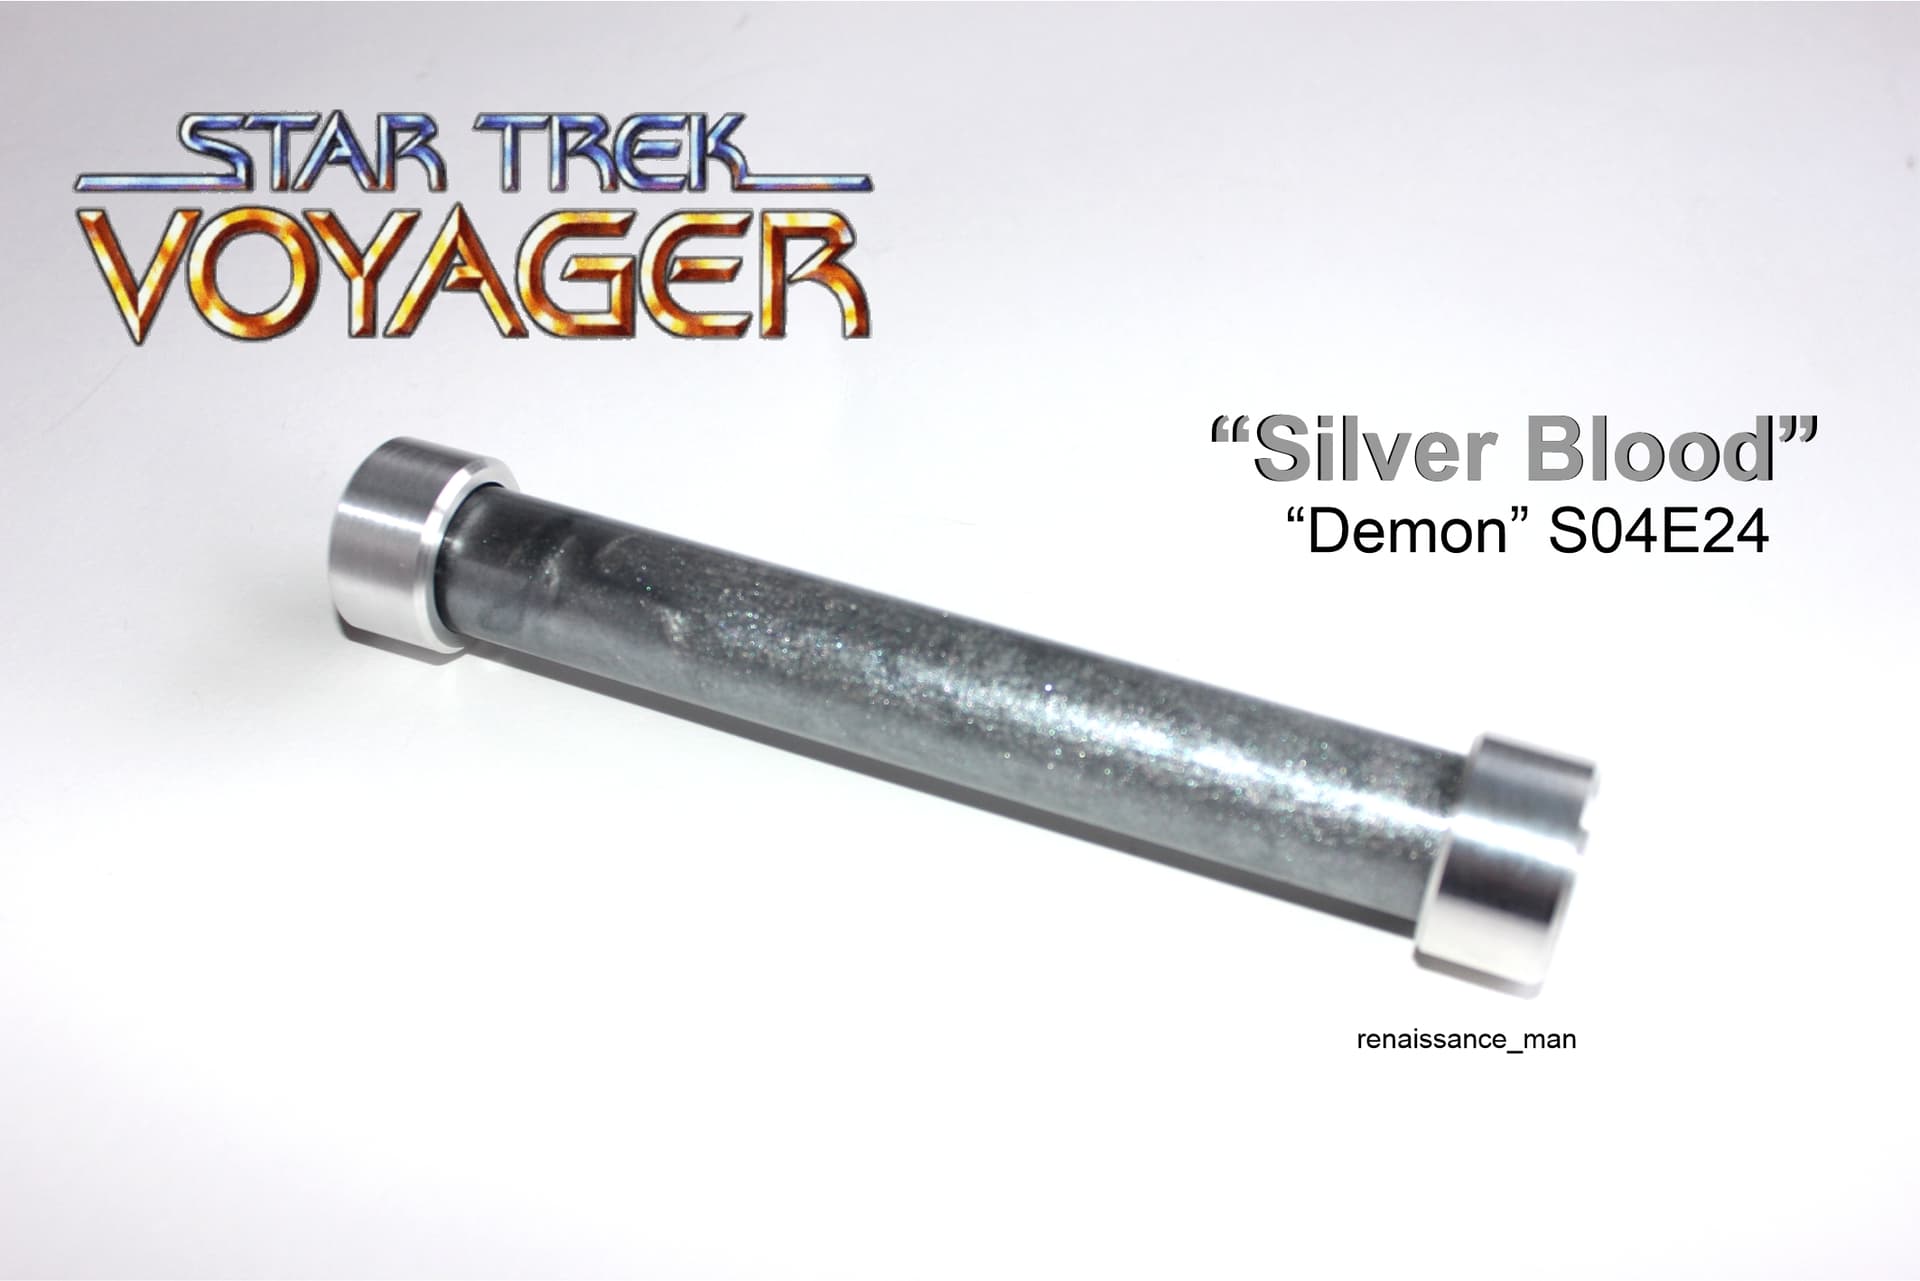 Voyager Silver Blood prop 3.jpg